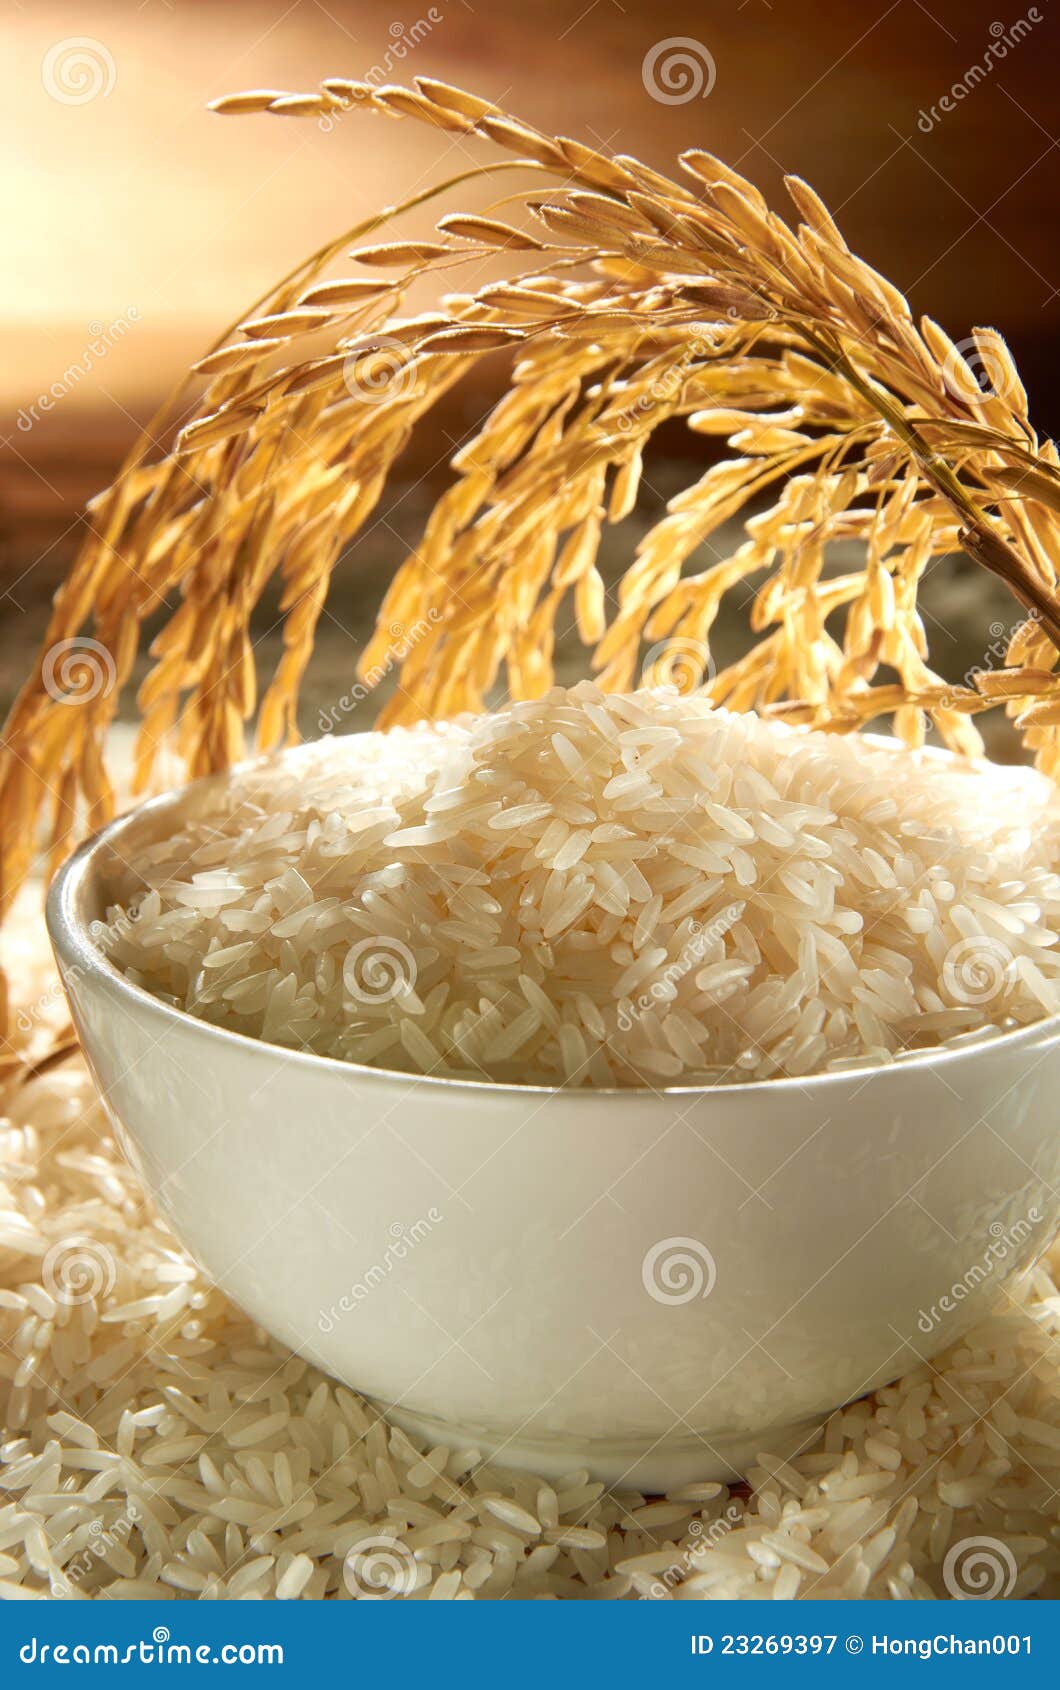 rice grain